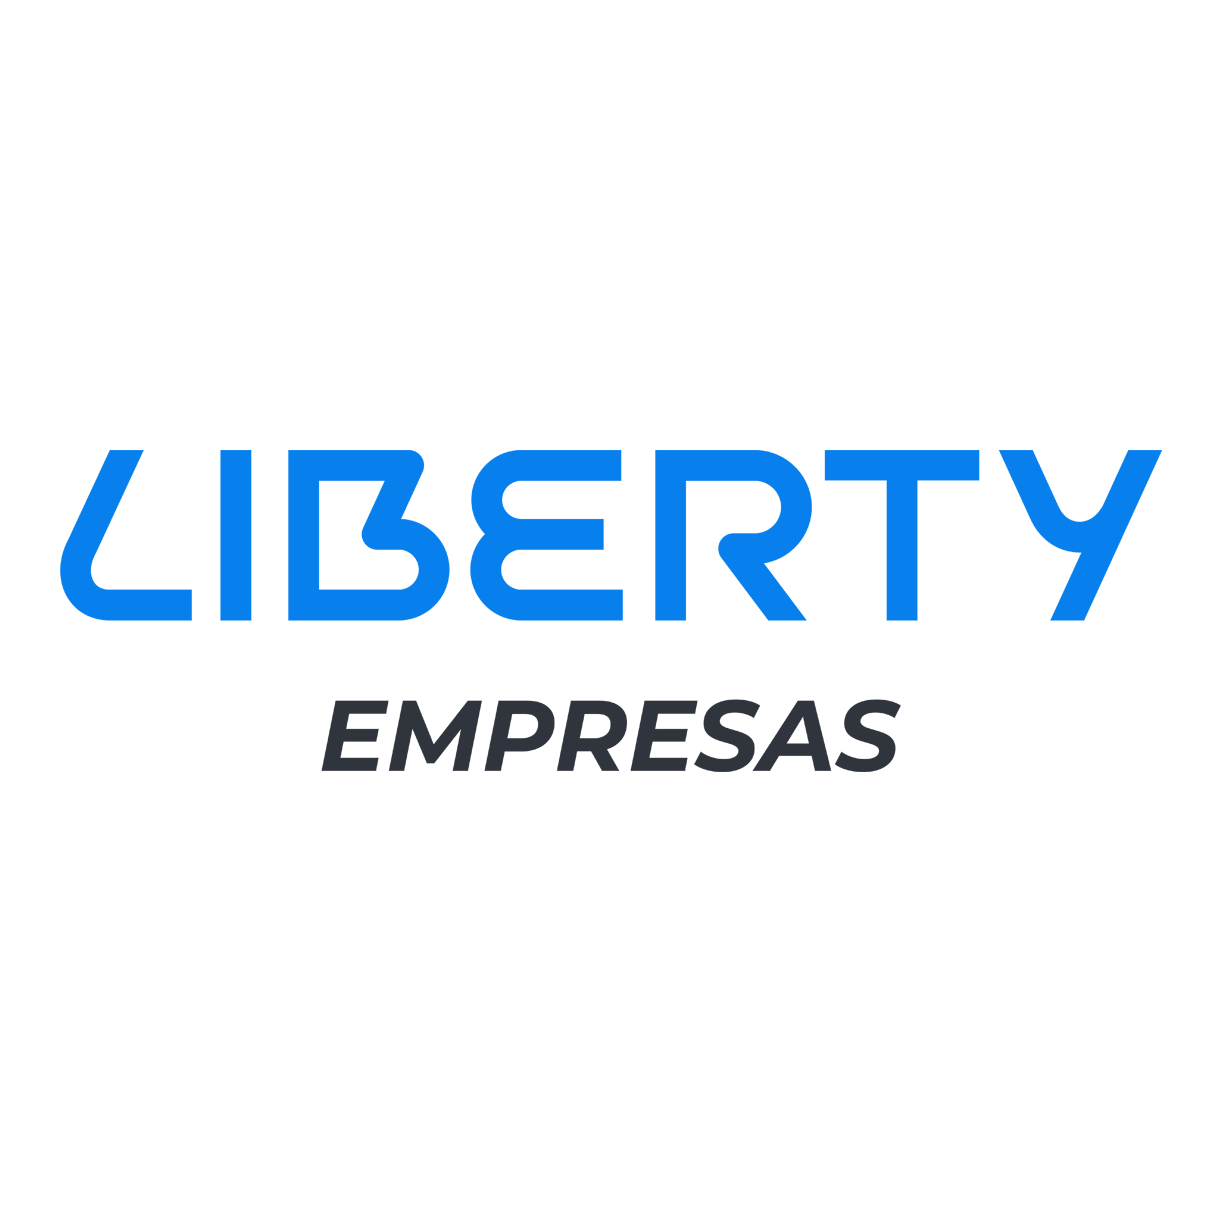 Liberty Empresas.png